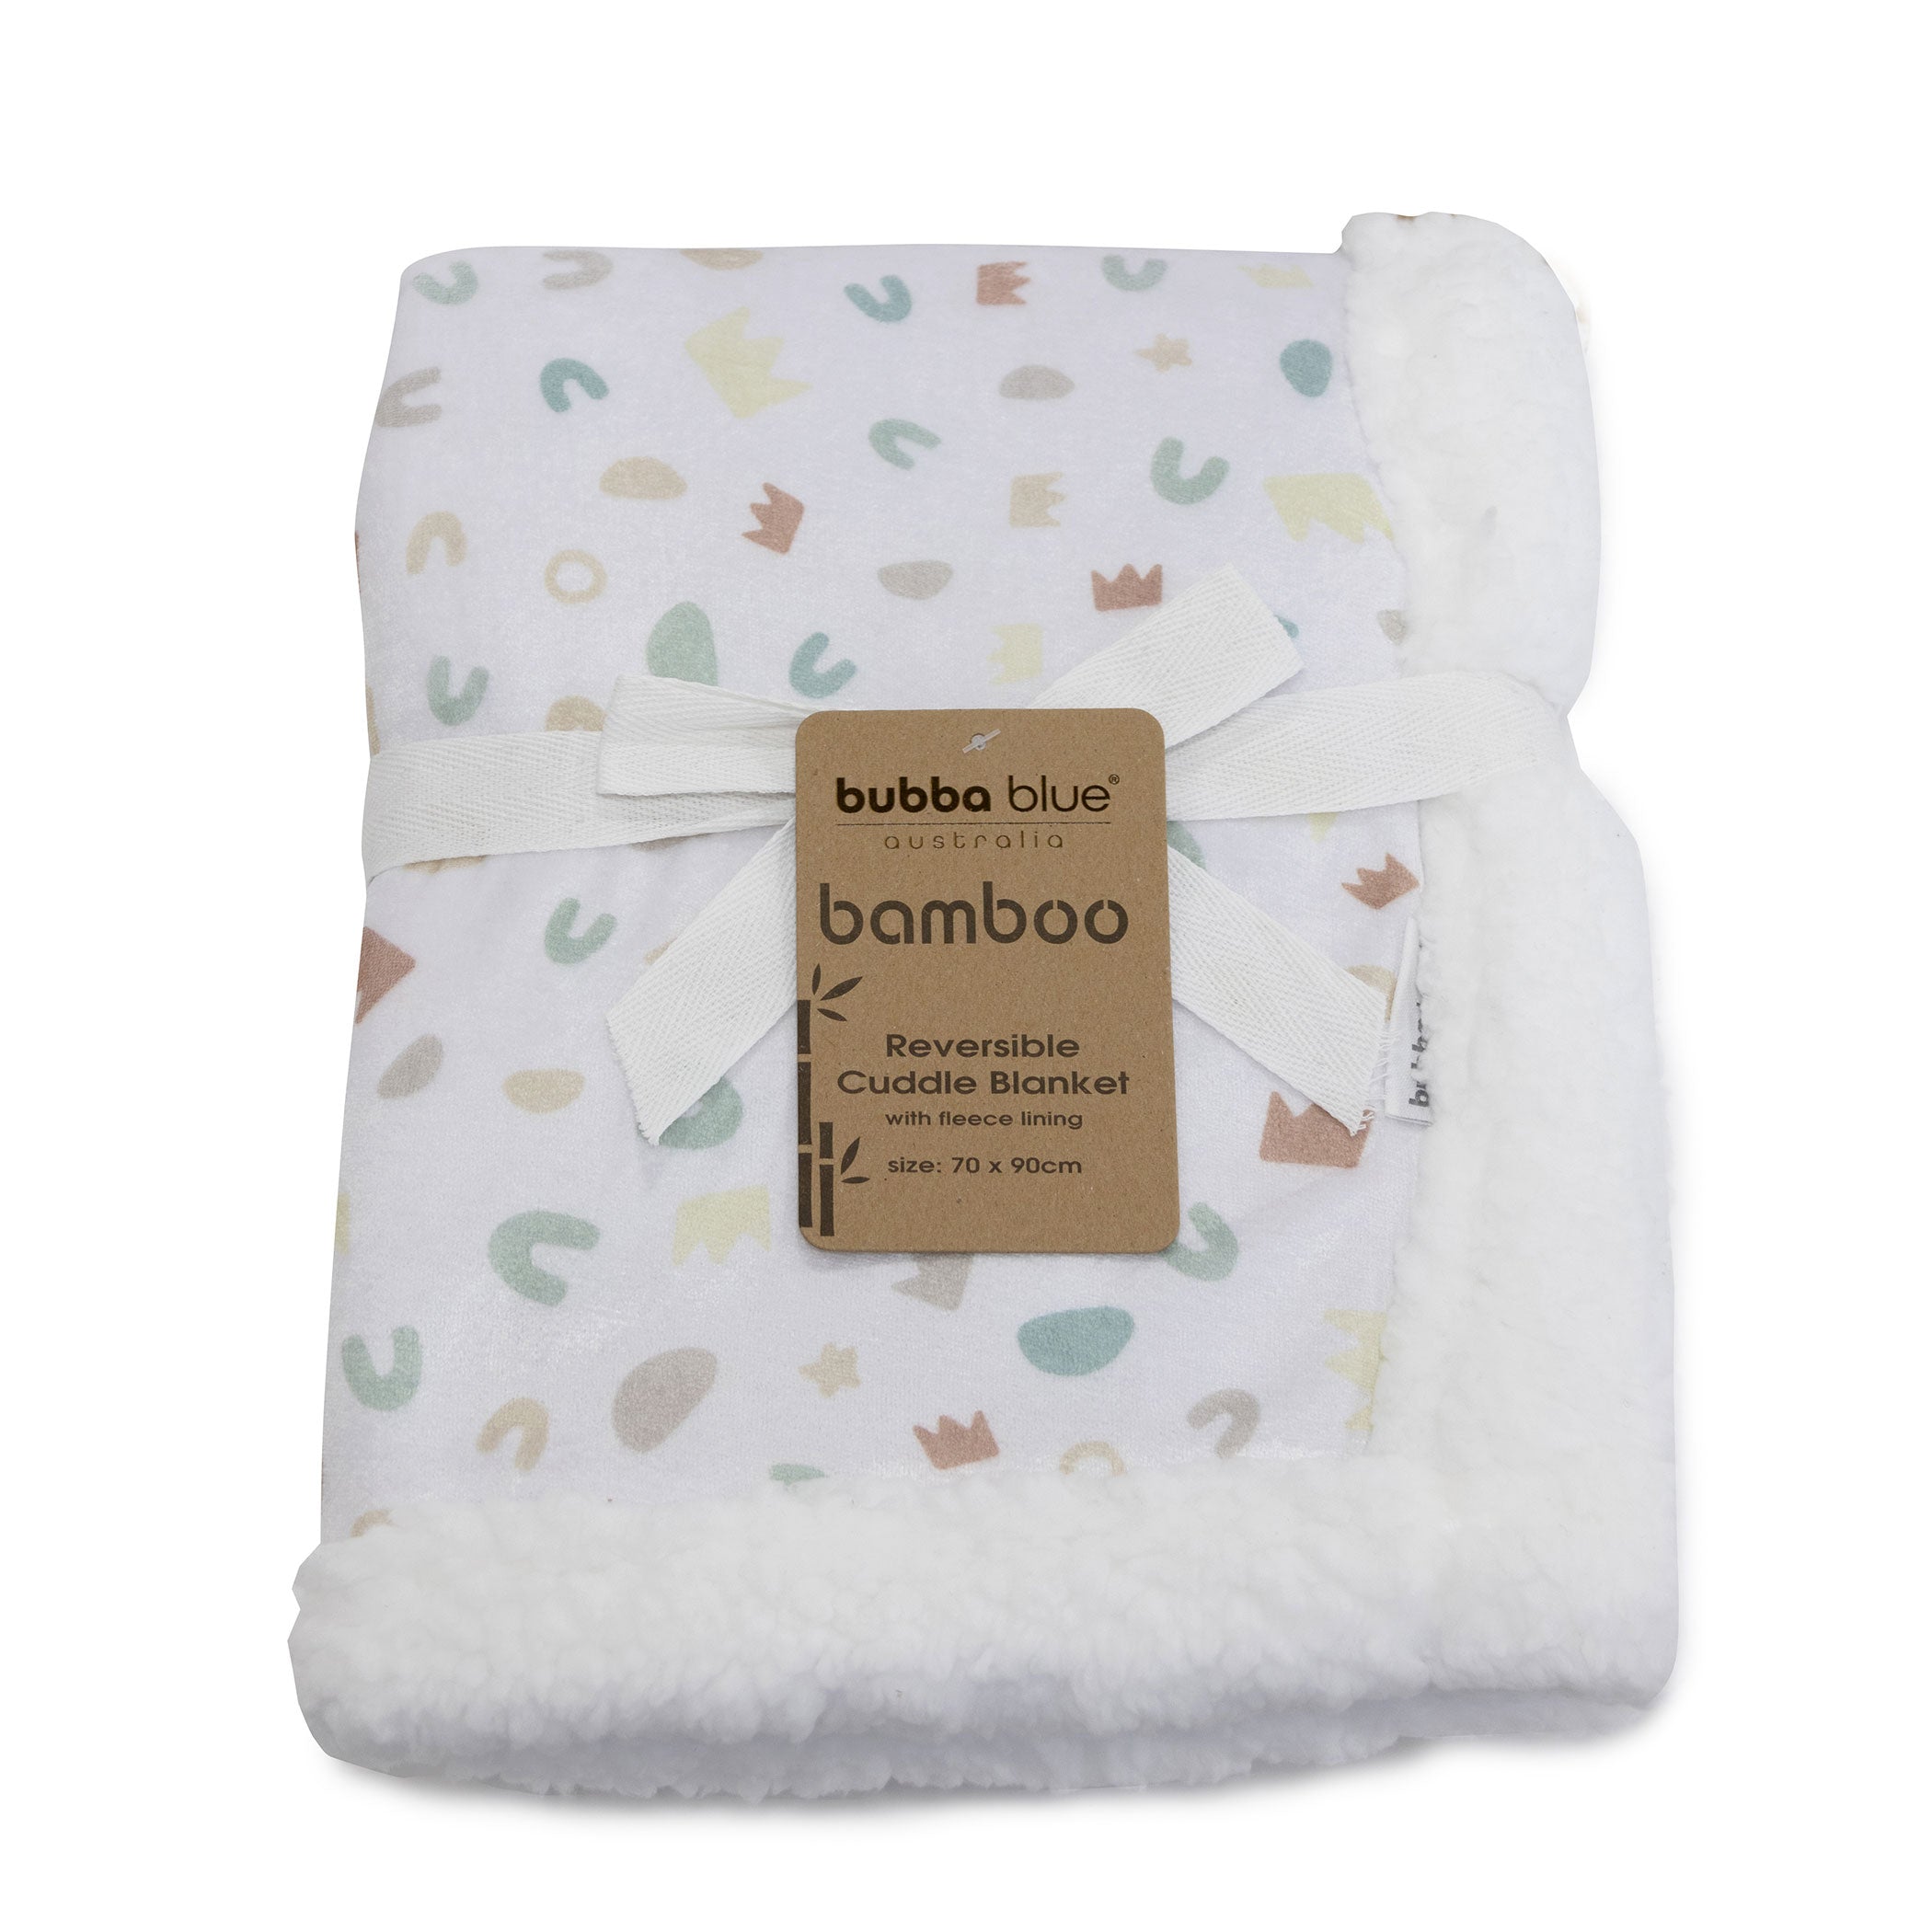 Sleepy Safari Bamboo Reversible Cuddle Blanket